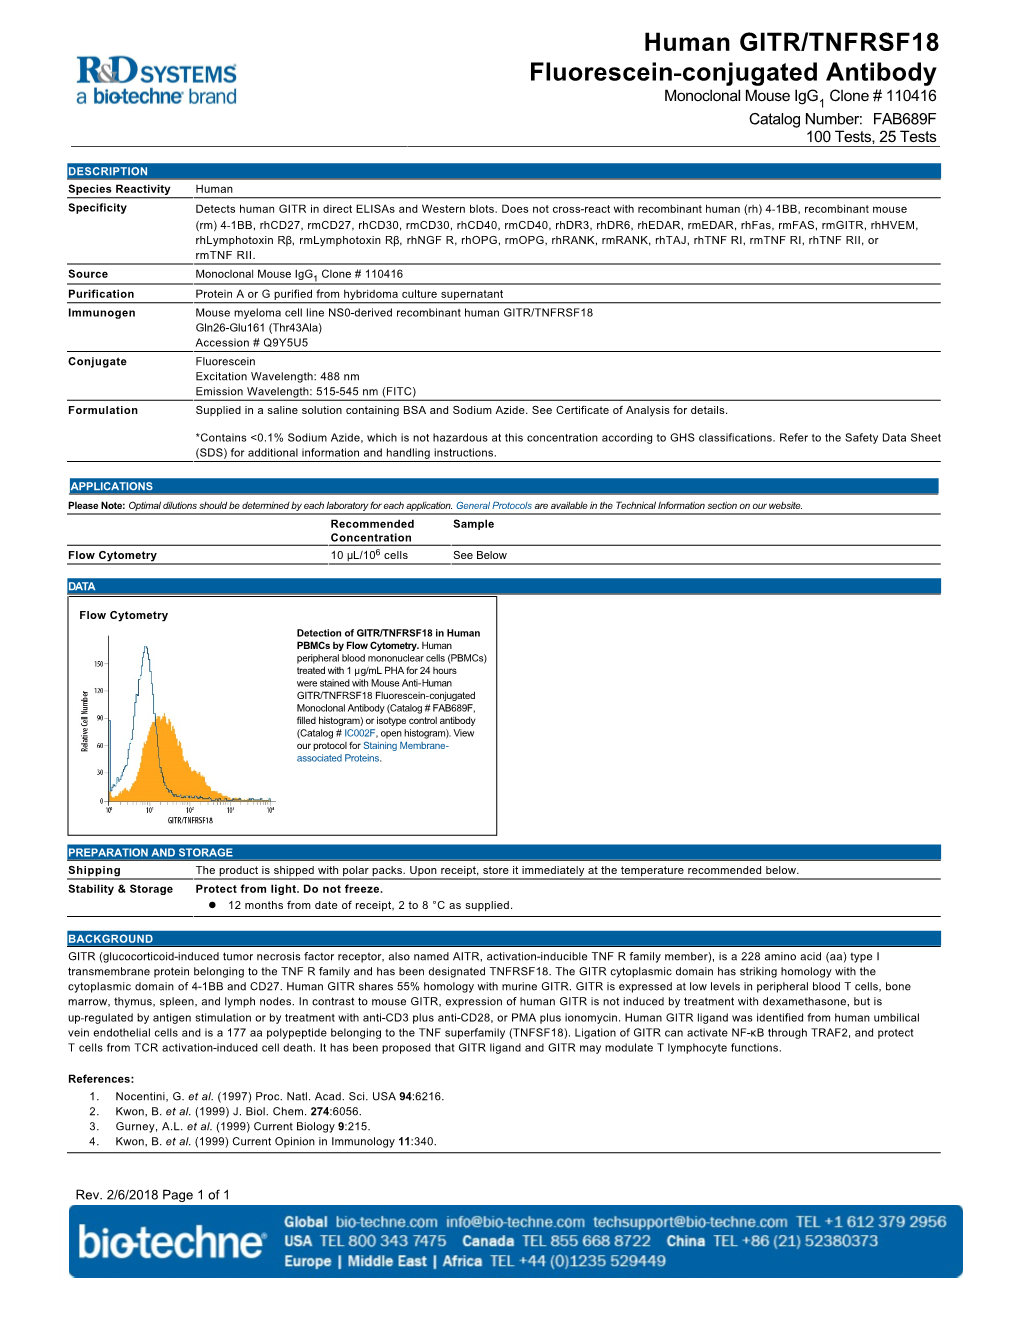 Human GITR/TNFRSF18 Fluorescein-Conjugated Antibody